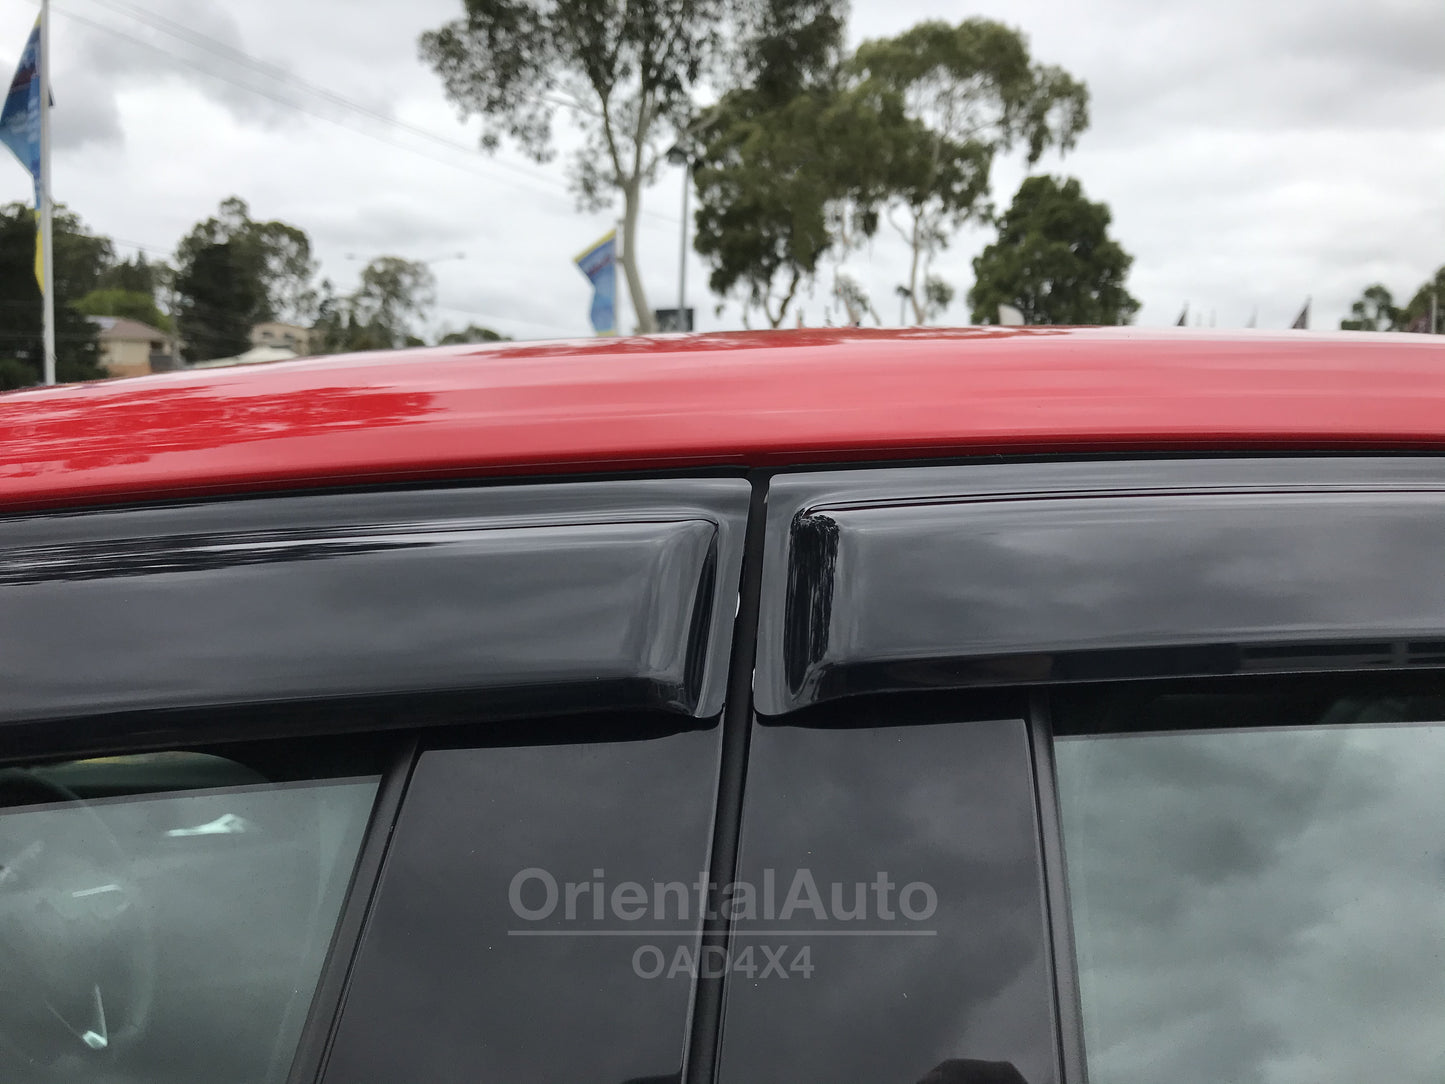 Luxury Weathershields Weather Shields Window Visor For Holden Commodore ZB Sedan 2017-Onwards